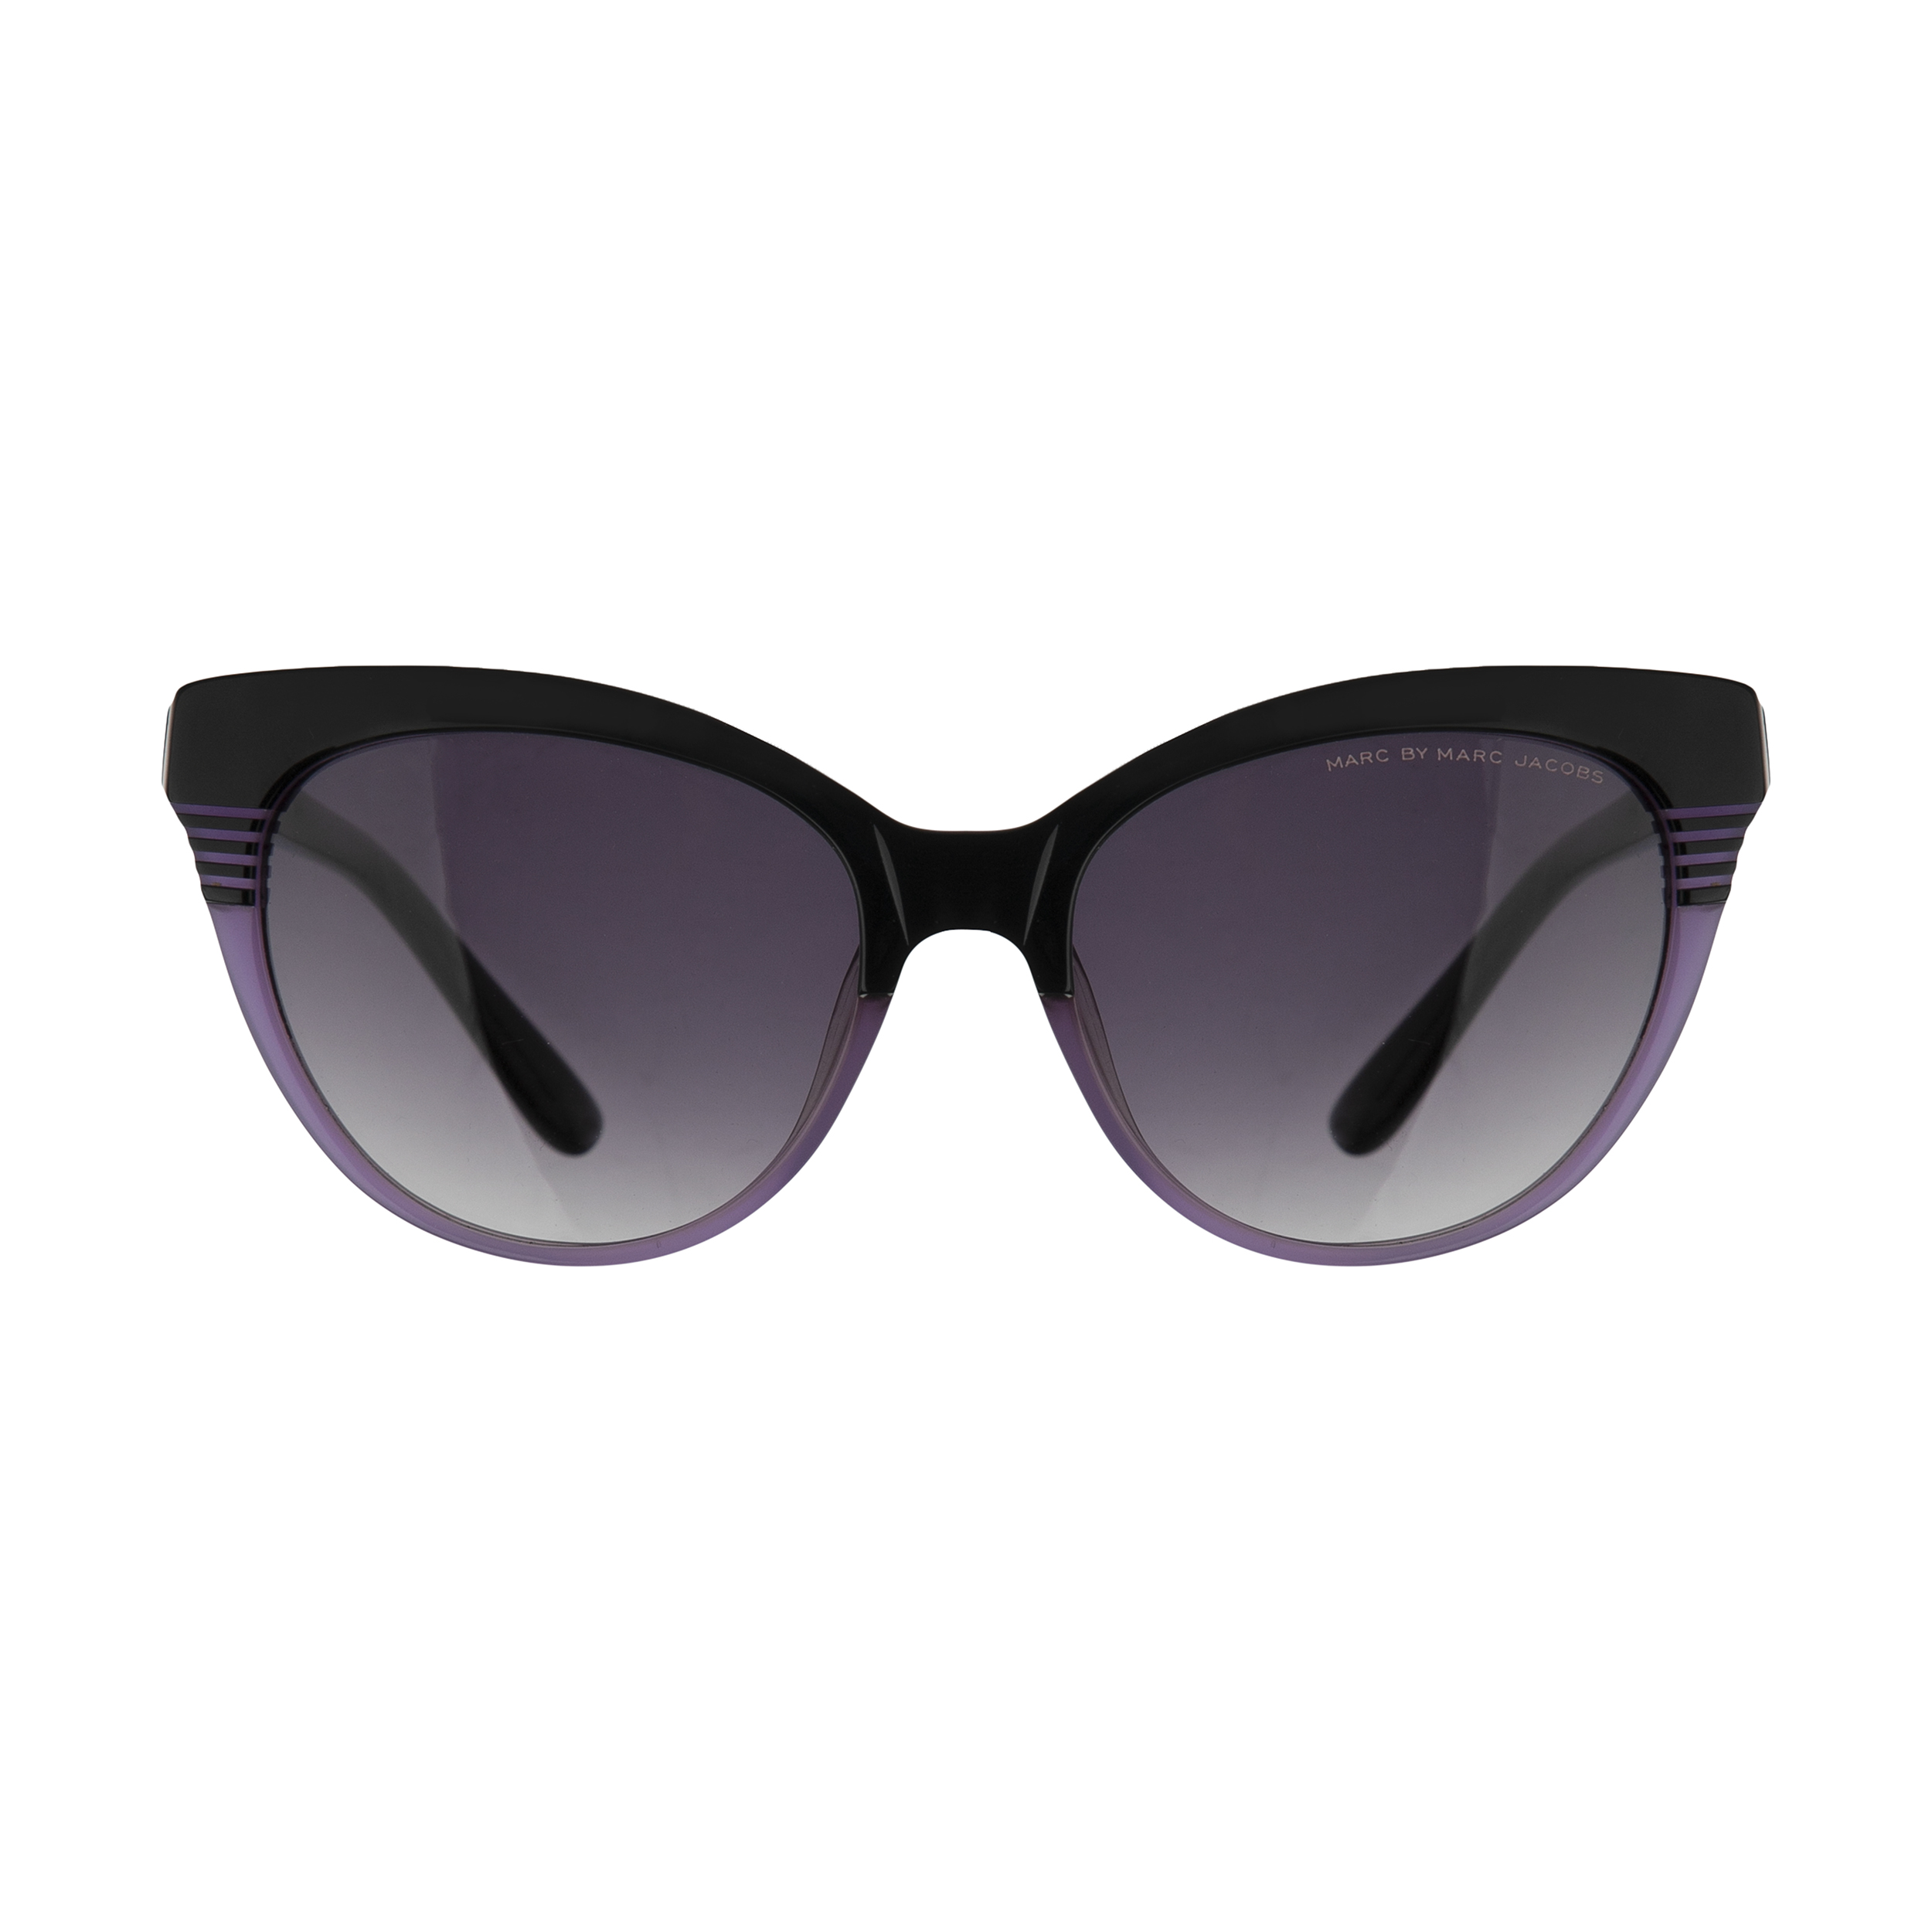  عینک آفتابی مارک جکوبس مدل 390 -  - 1